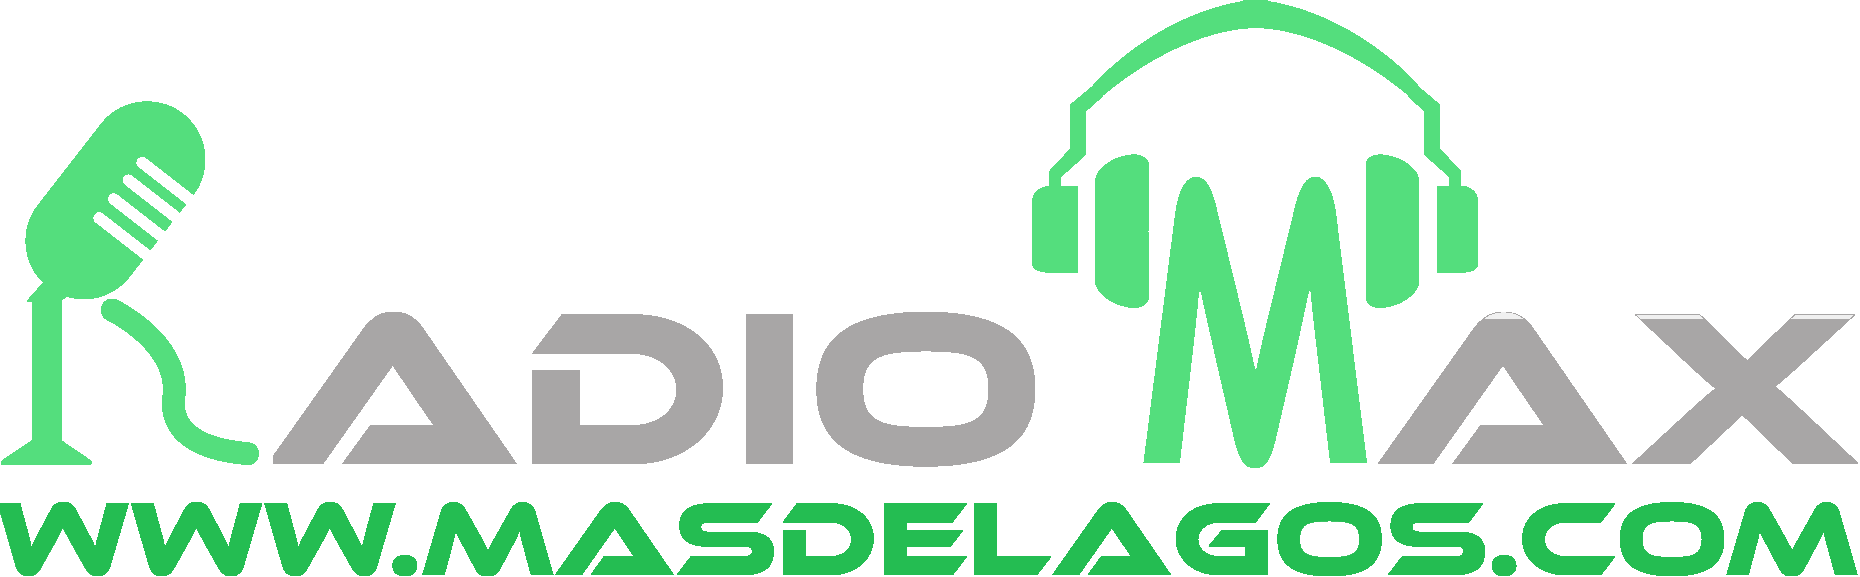 Radio Max de Lagos